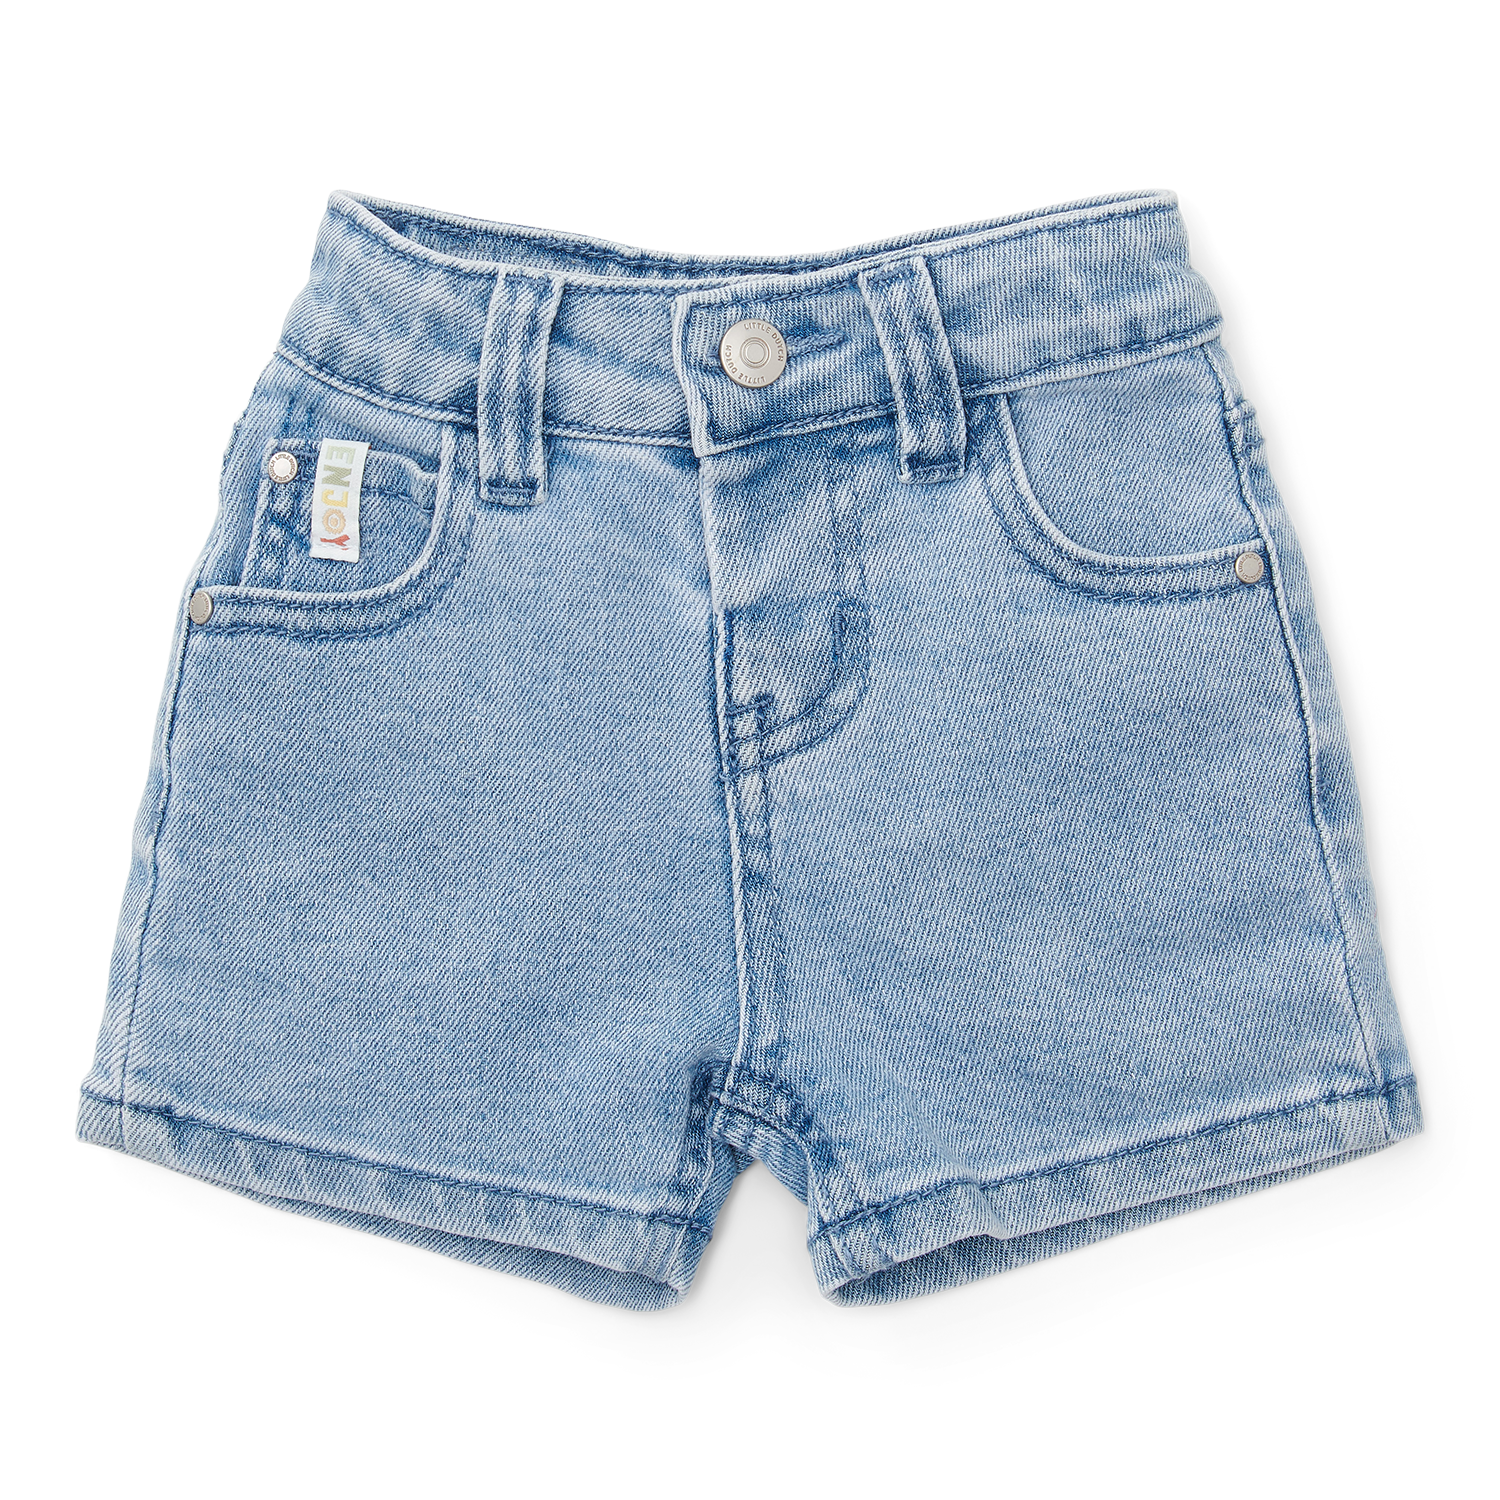 Kurze Hose / Shorts Denim mit Taschen Little Farm jeans (Gr. 86)